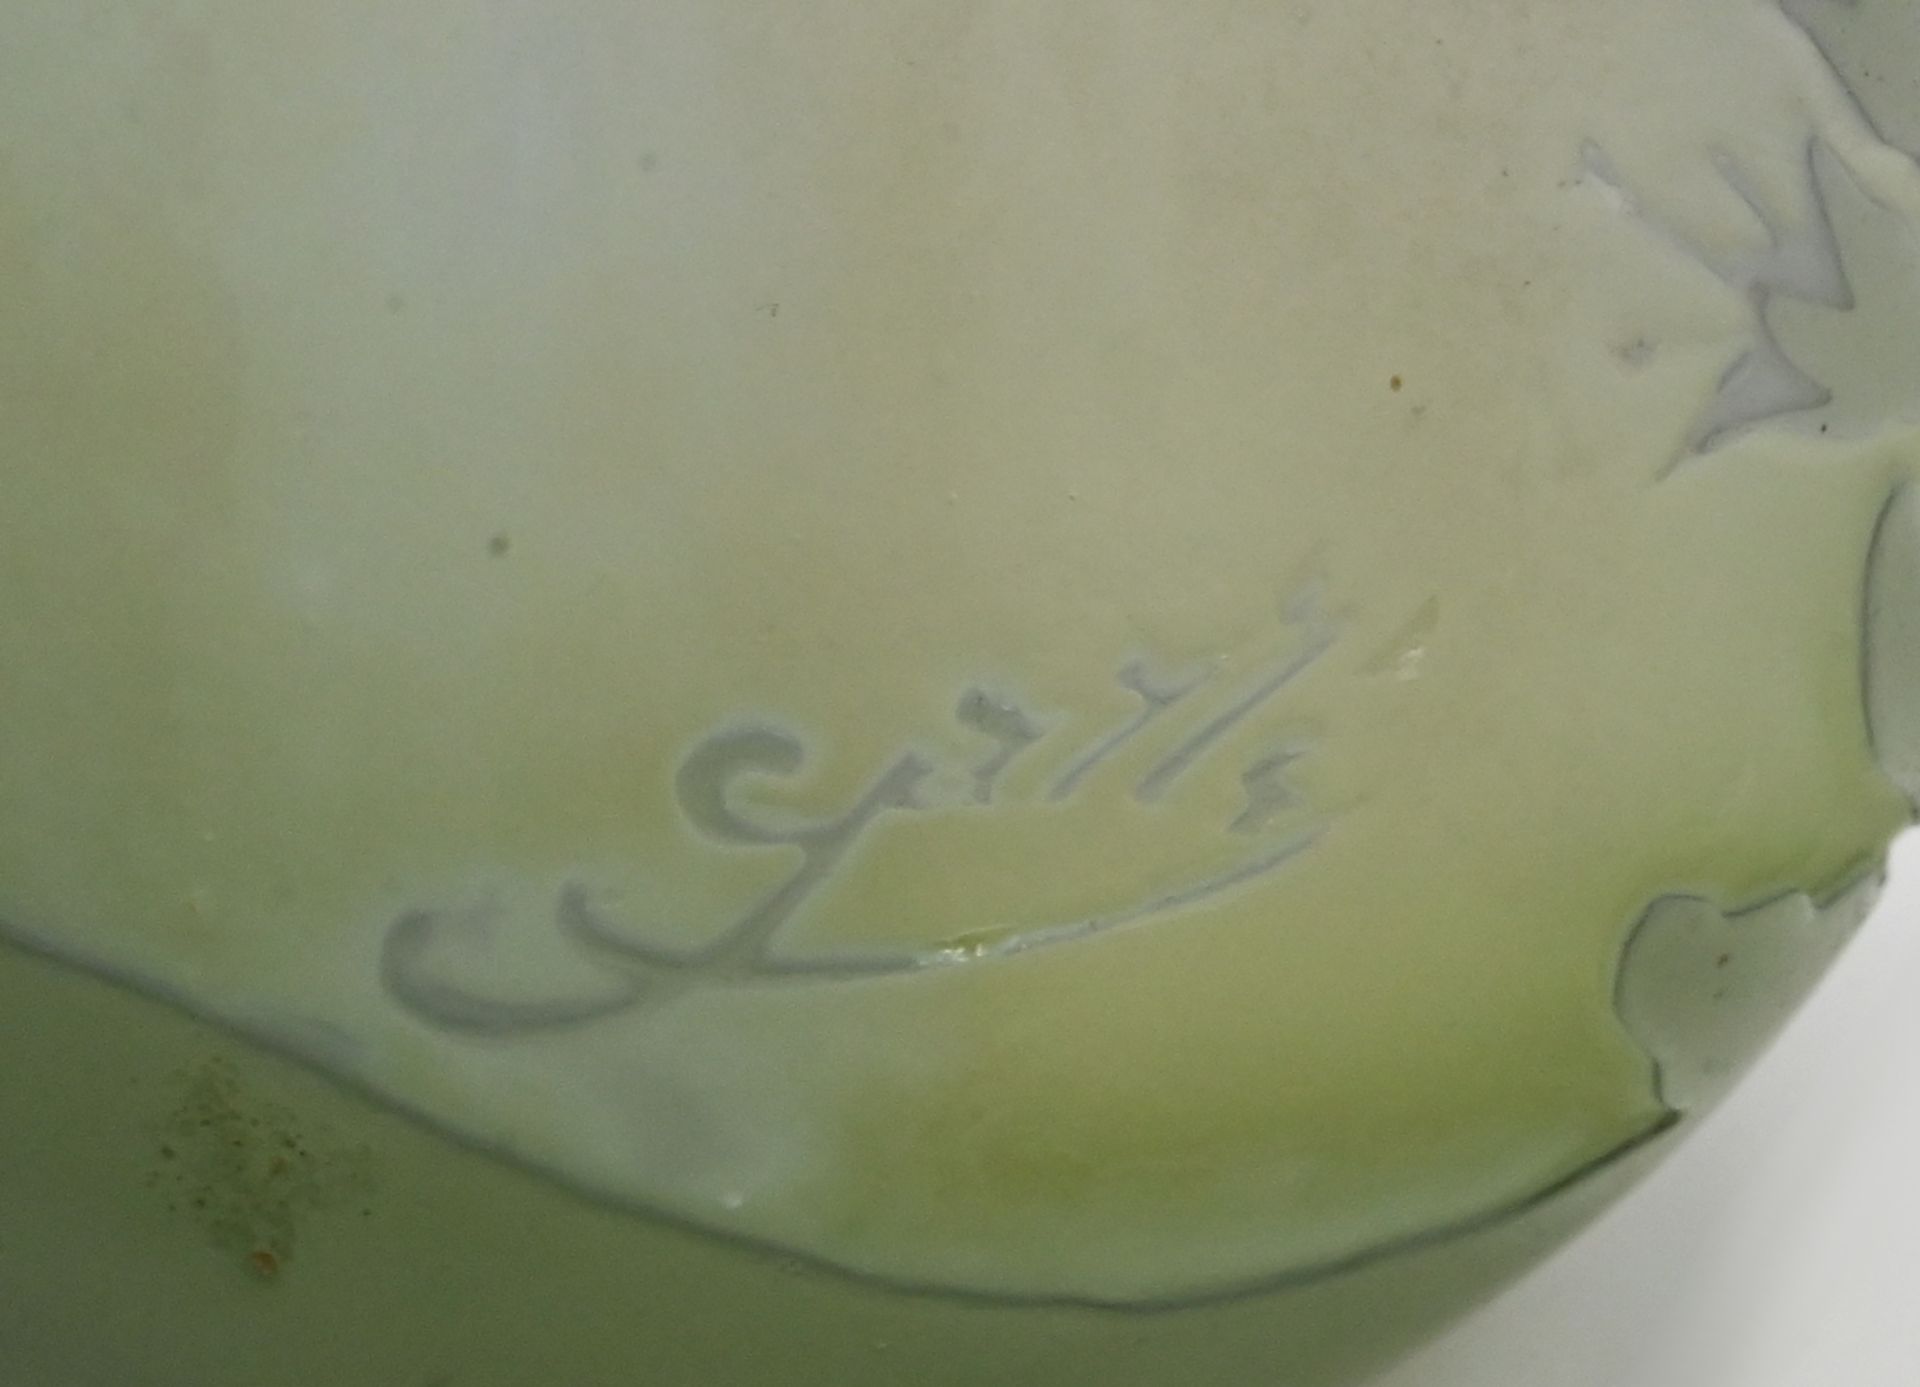 1 Solifiore Glas "Glockenblumen" wohl Anfang 20. Jh. rücks. bez. GALLÉ (wohl Émile Gallé 1846 Nancy- - Image 3 of 3